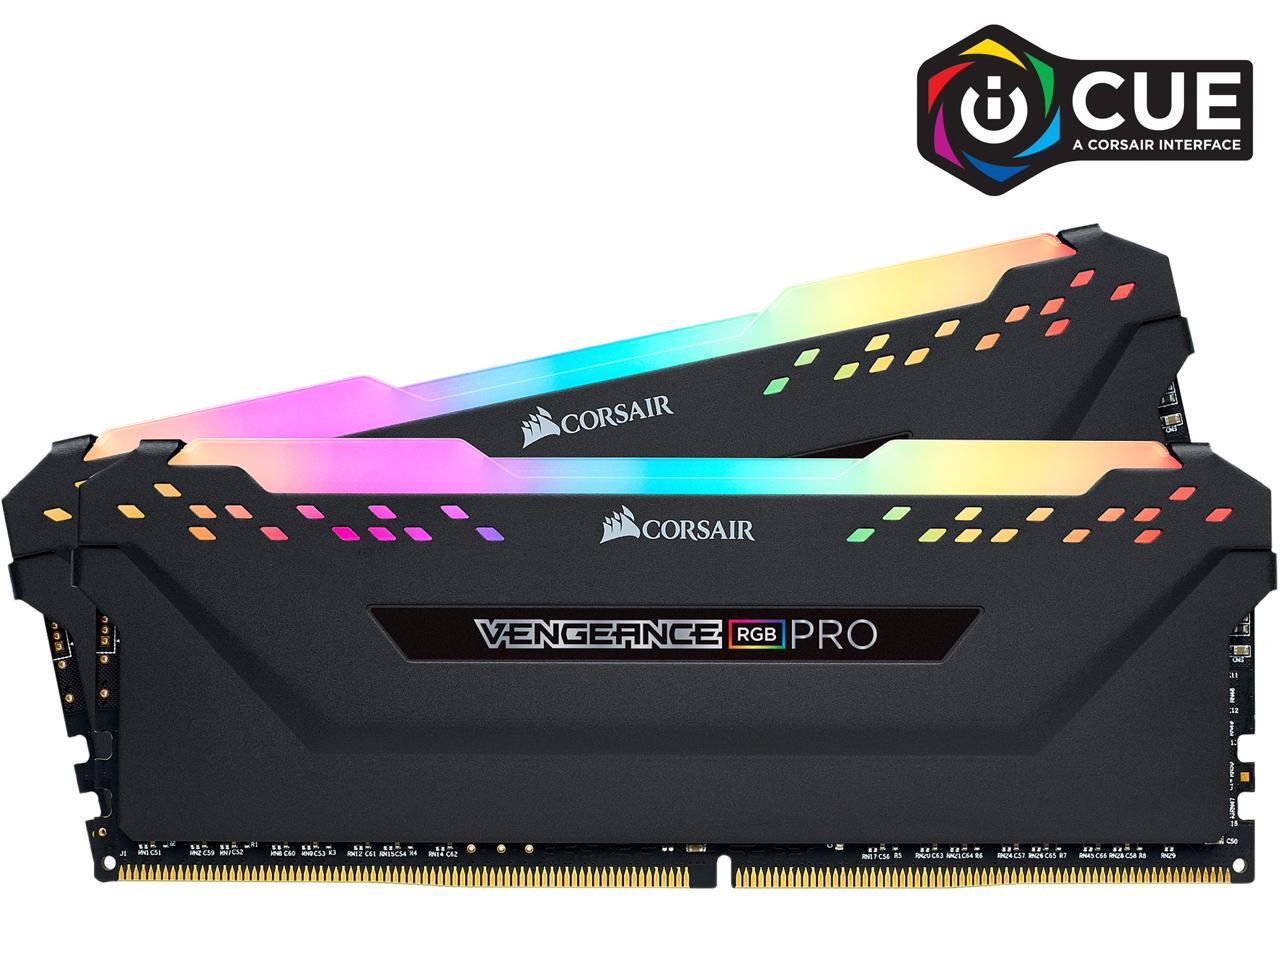 CORSAIR Vengeance RGB Pro Ryzen Ready) 16GB (2 x 8GB) 288-Pin DDR4 2933 (PC4 23400) Optimized Desktop Memory CMW16GX4M2Z2933C16 - Newegg.com